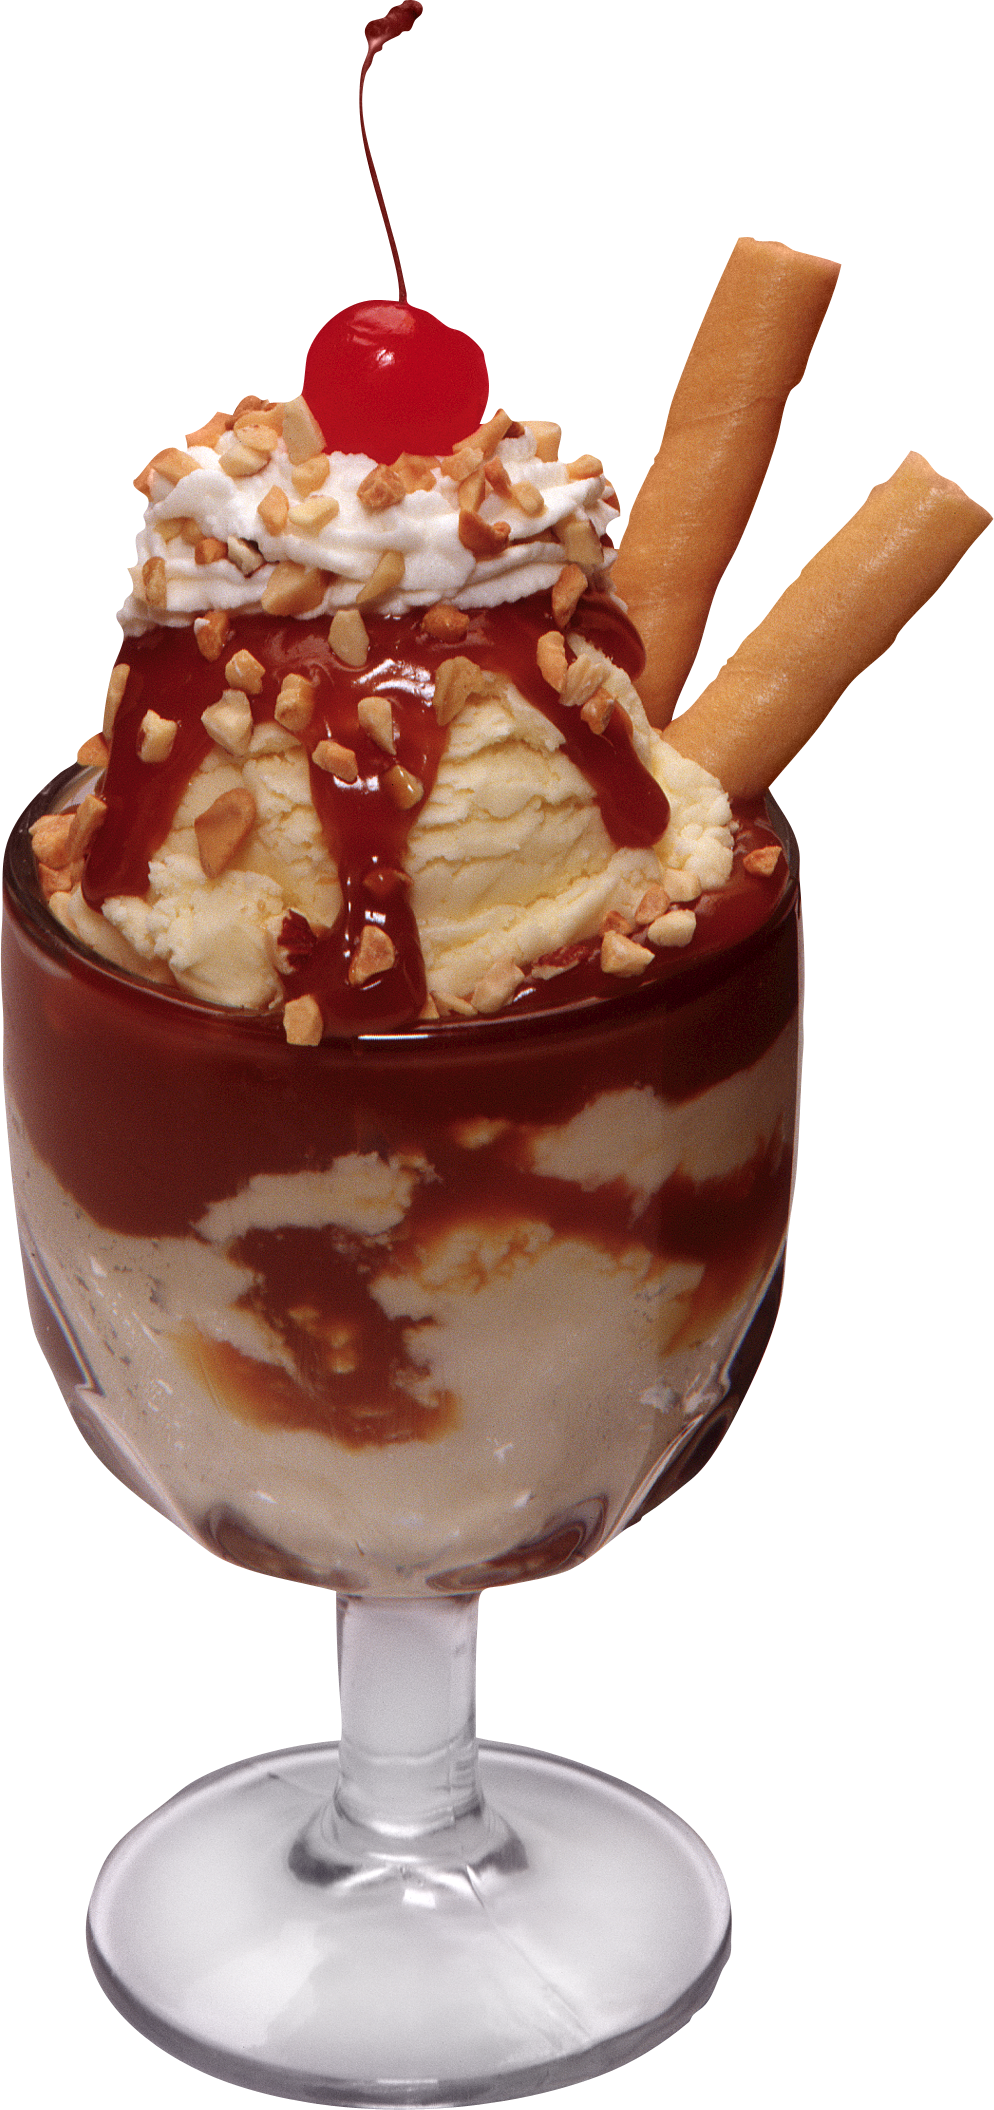 Ice cream png image. Yogurt clipart healthy dessert